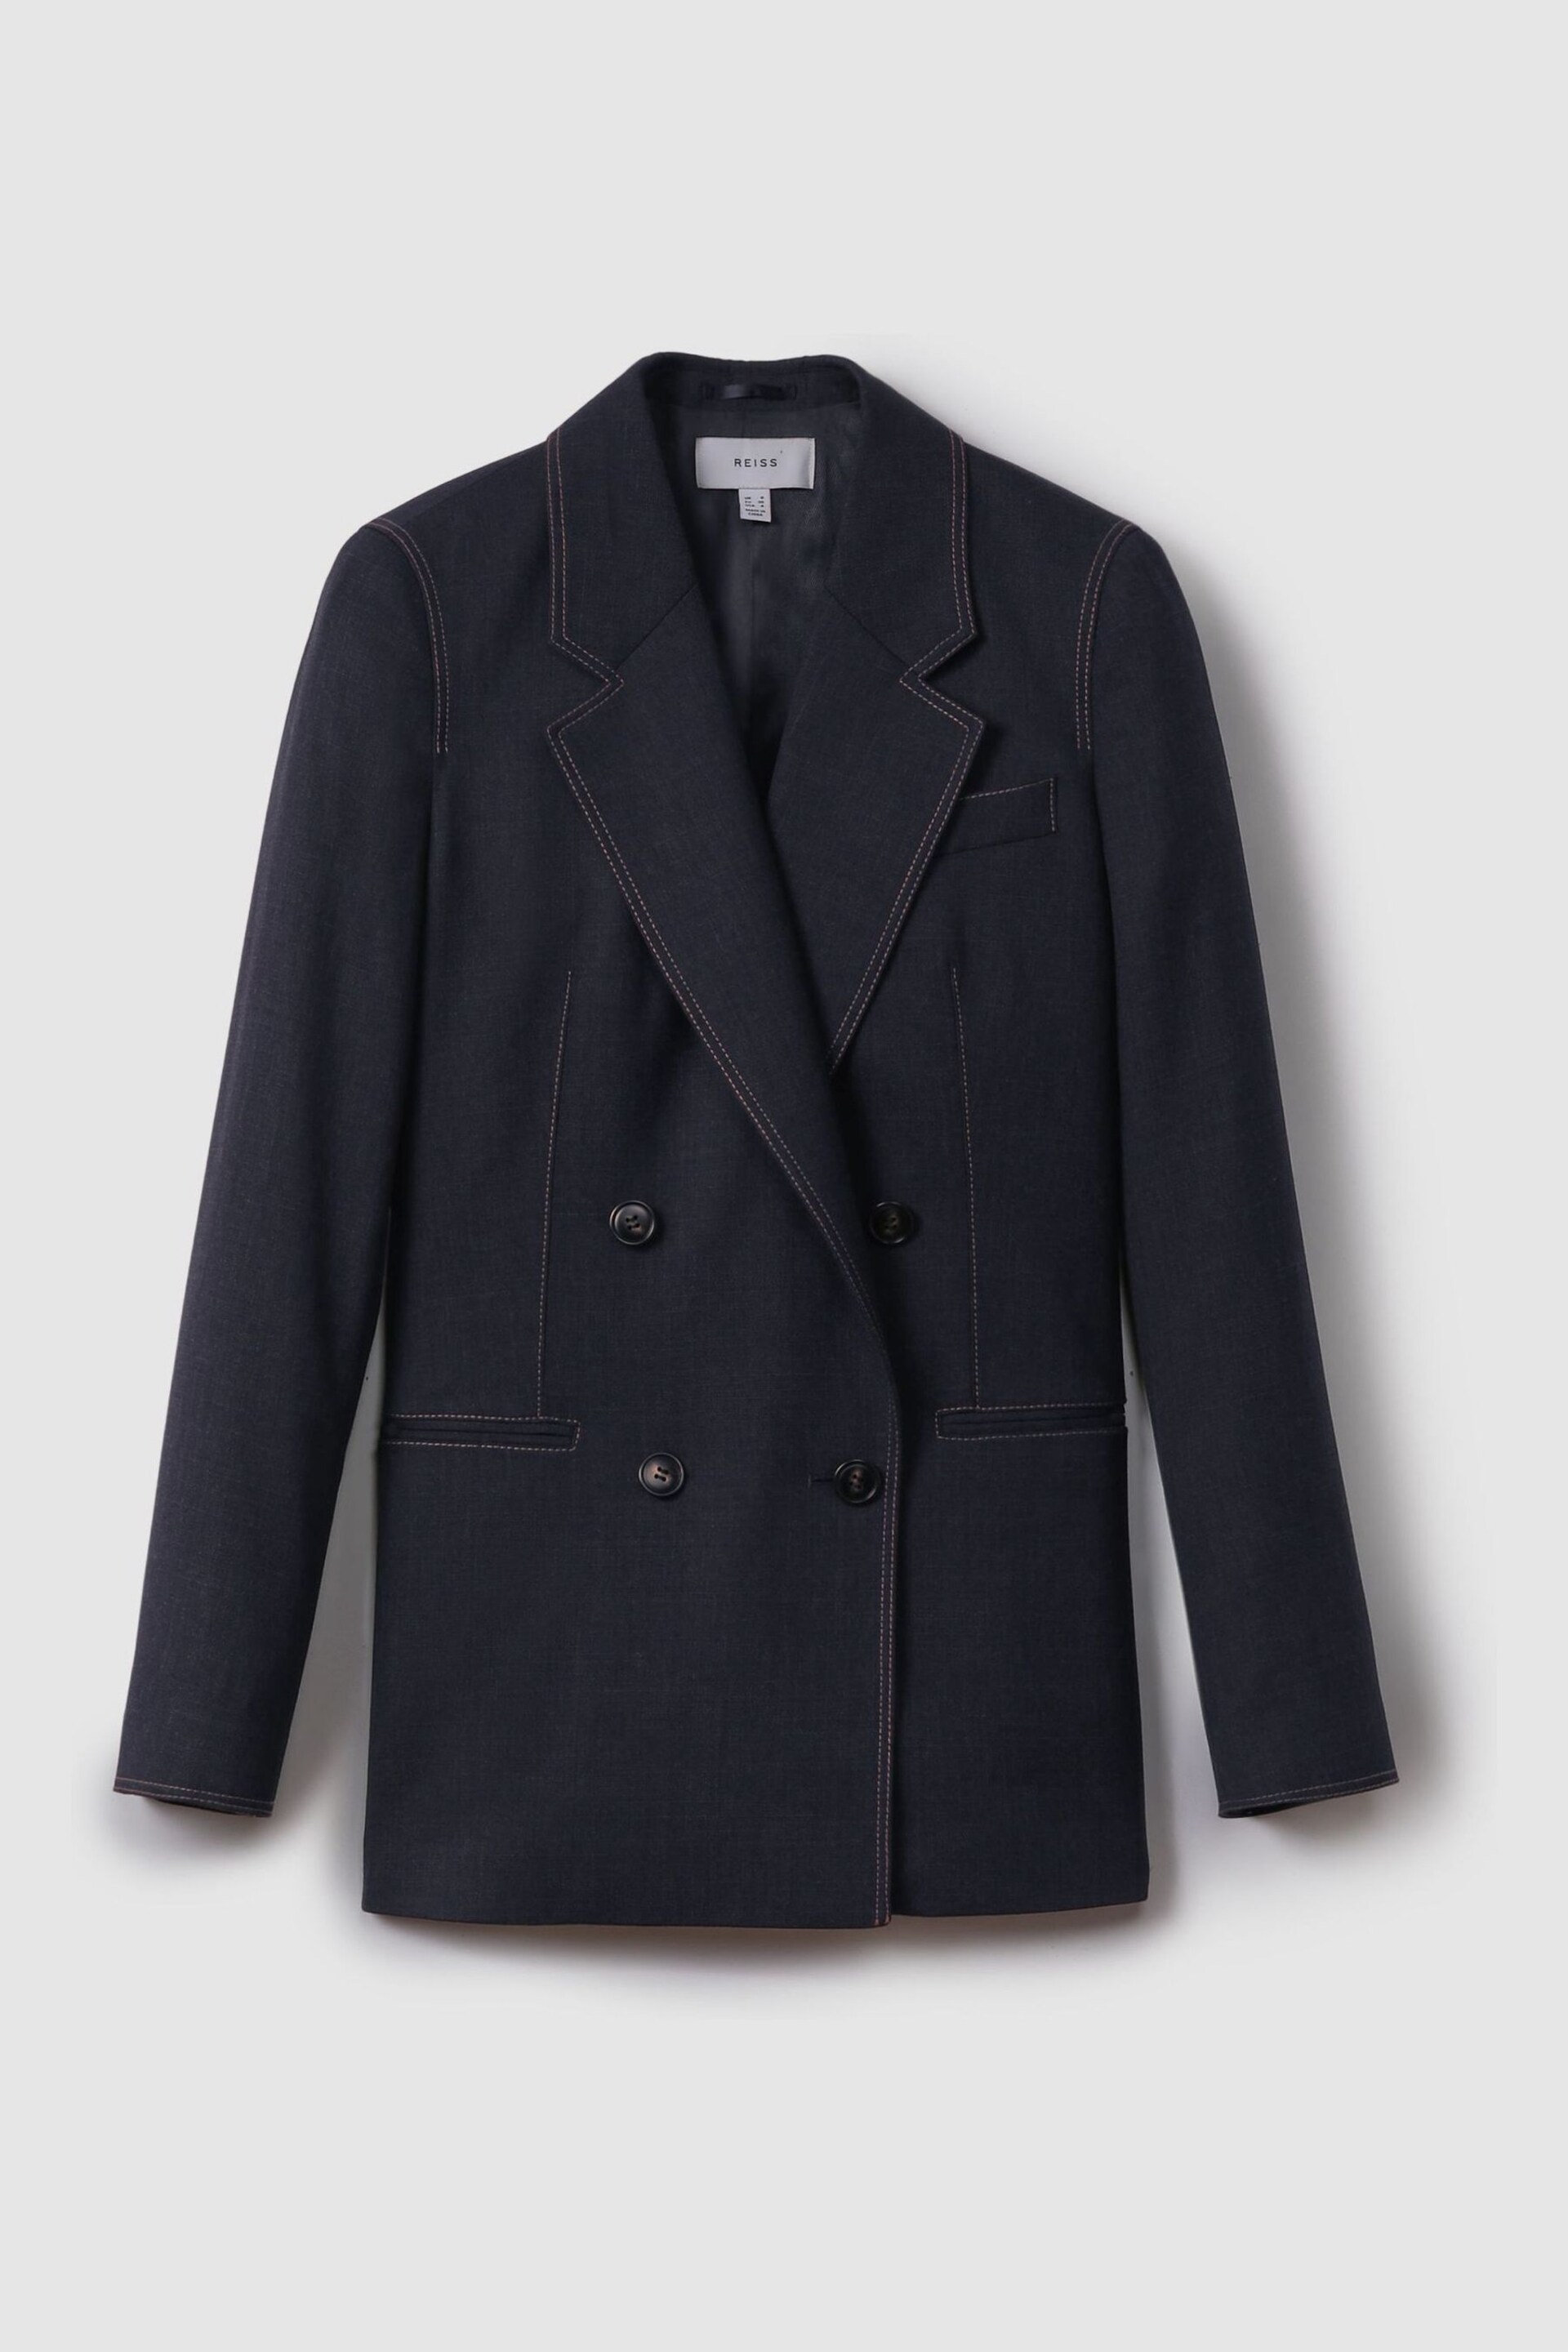 Reiss Navy Raven Wool Blend Denim Look Suit Blazer - Image 2 of 8